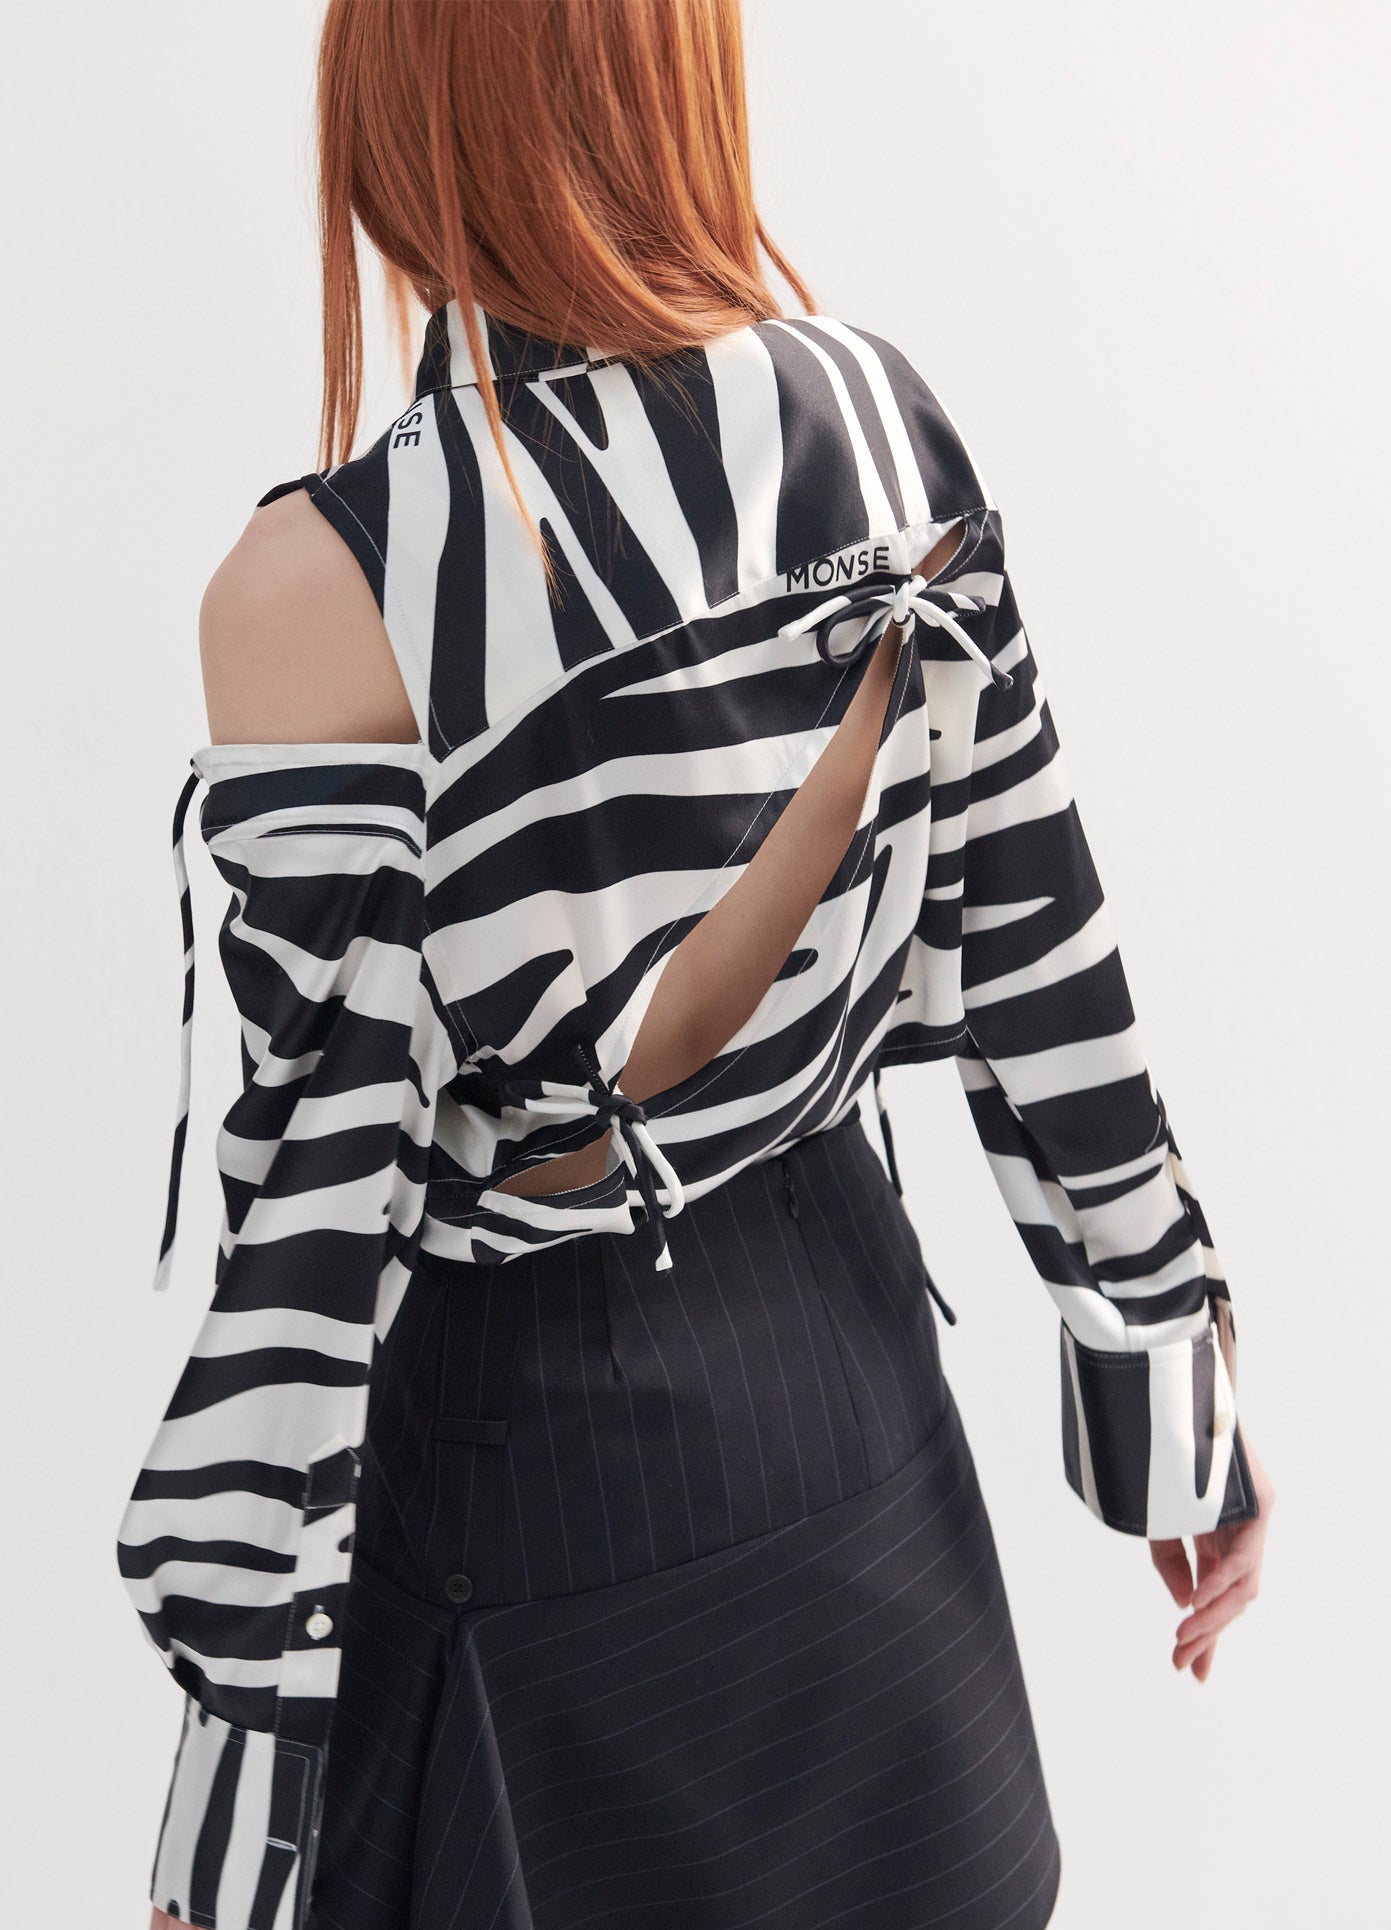 MONSE Zebra Slashed Blouse in Black and White Print on Model Back Detail View